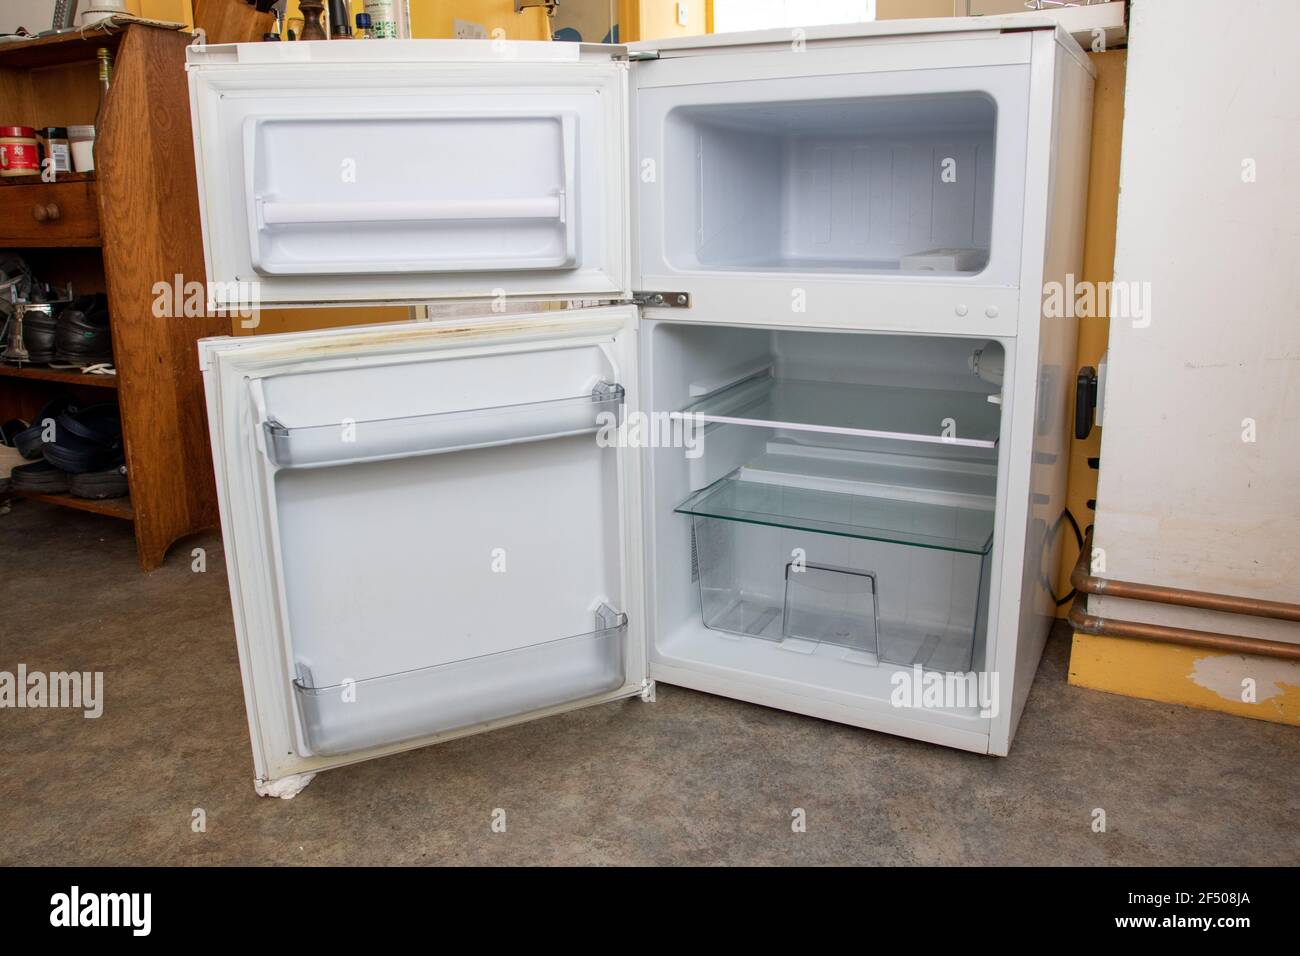 Used and empty under counter fridge freezer with doors open Stock Photo